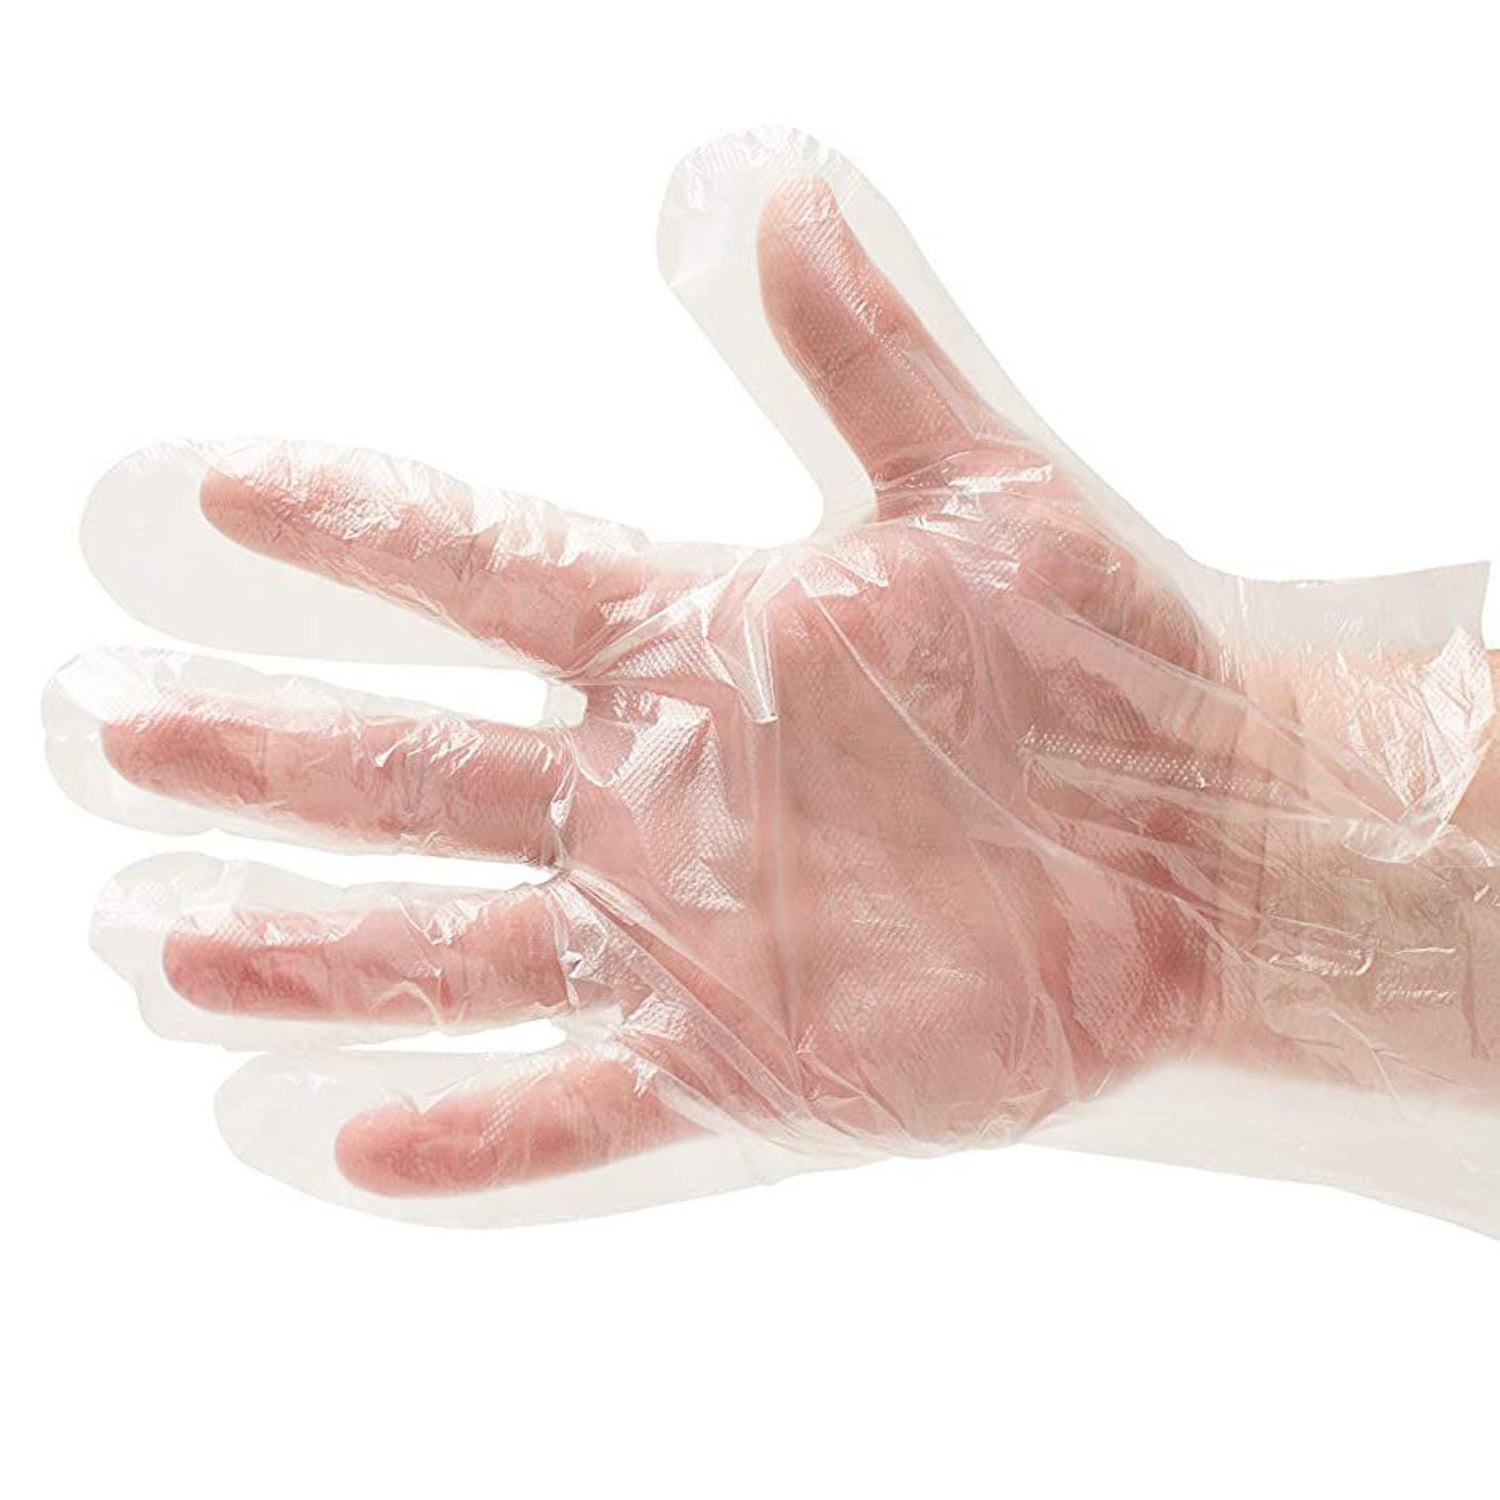 Dispos-a-Glove Non Sterile